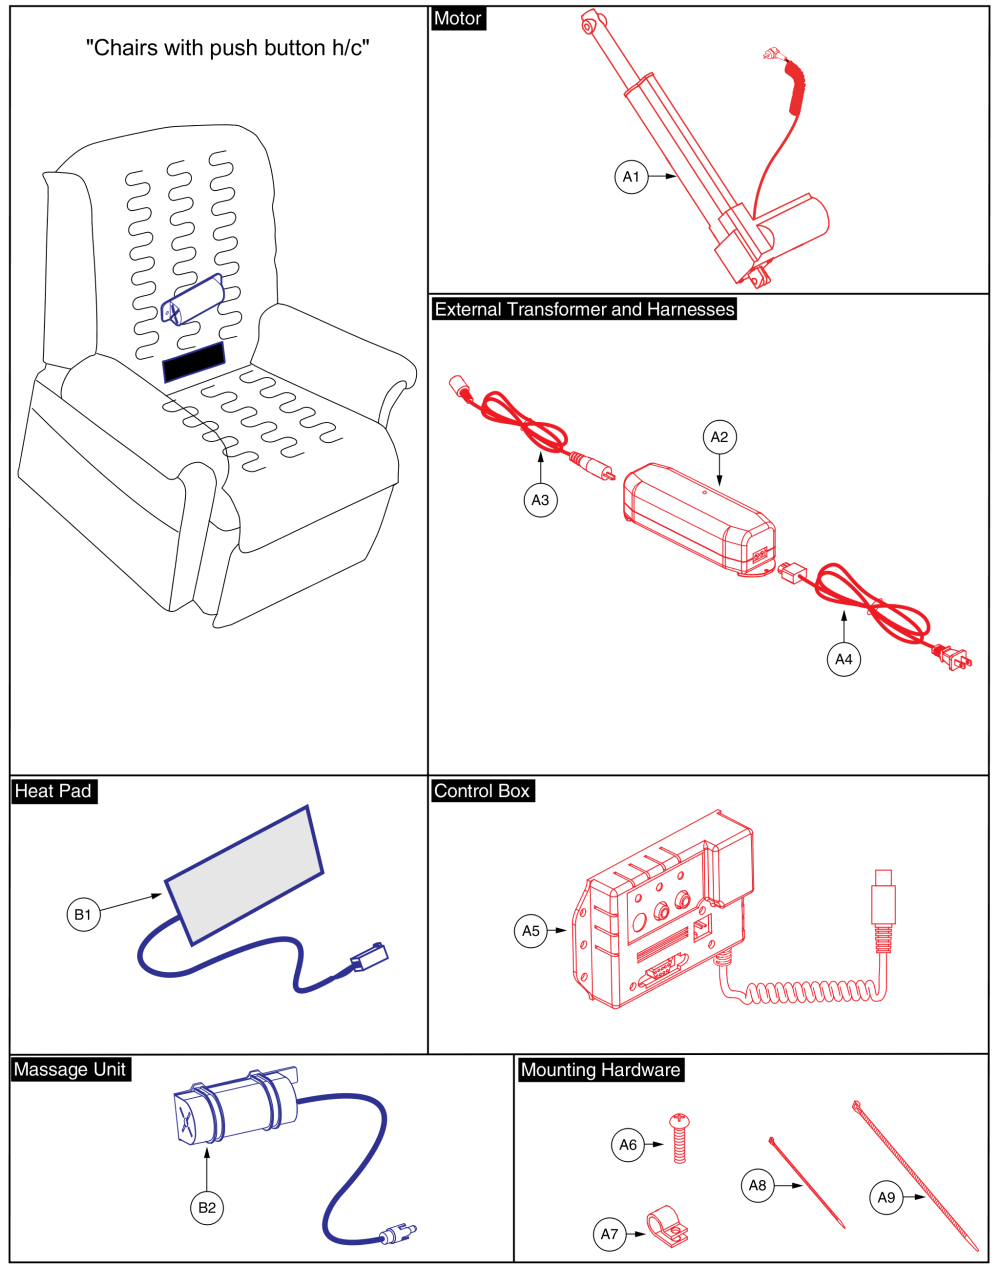 Heat/massage With Push Button Hand Control parts diagram